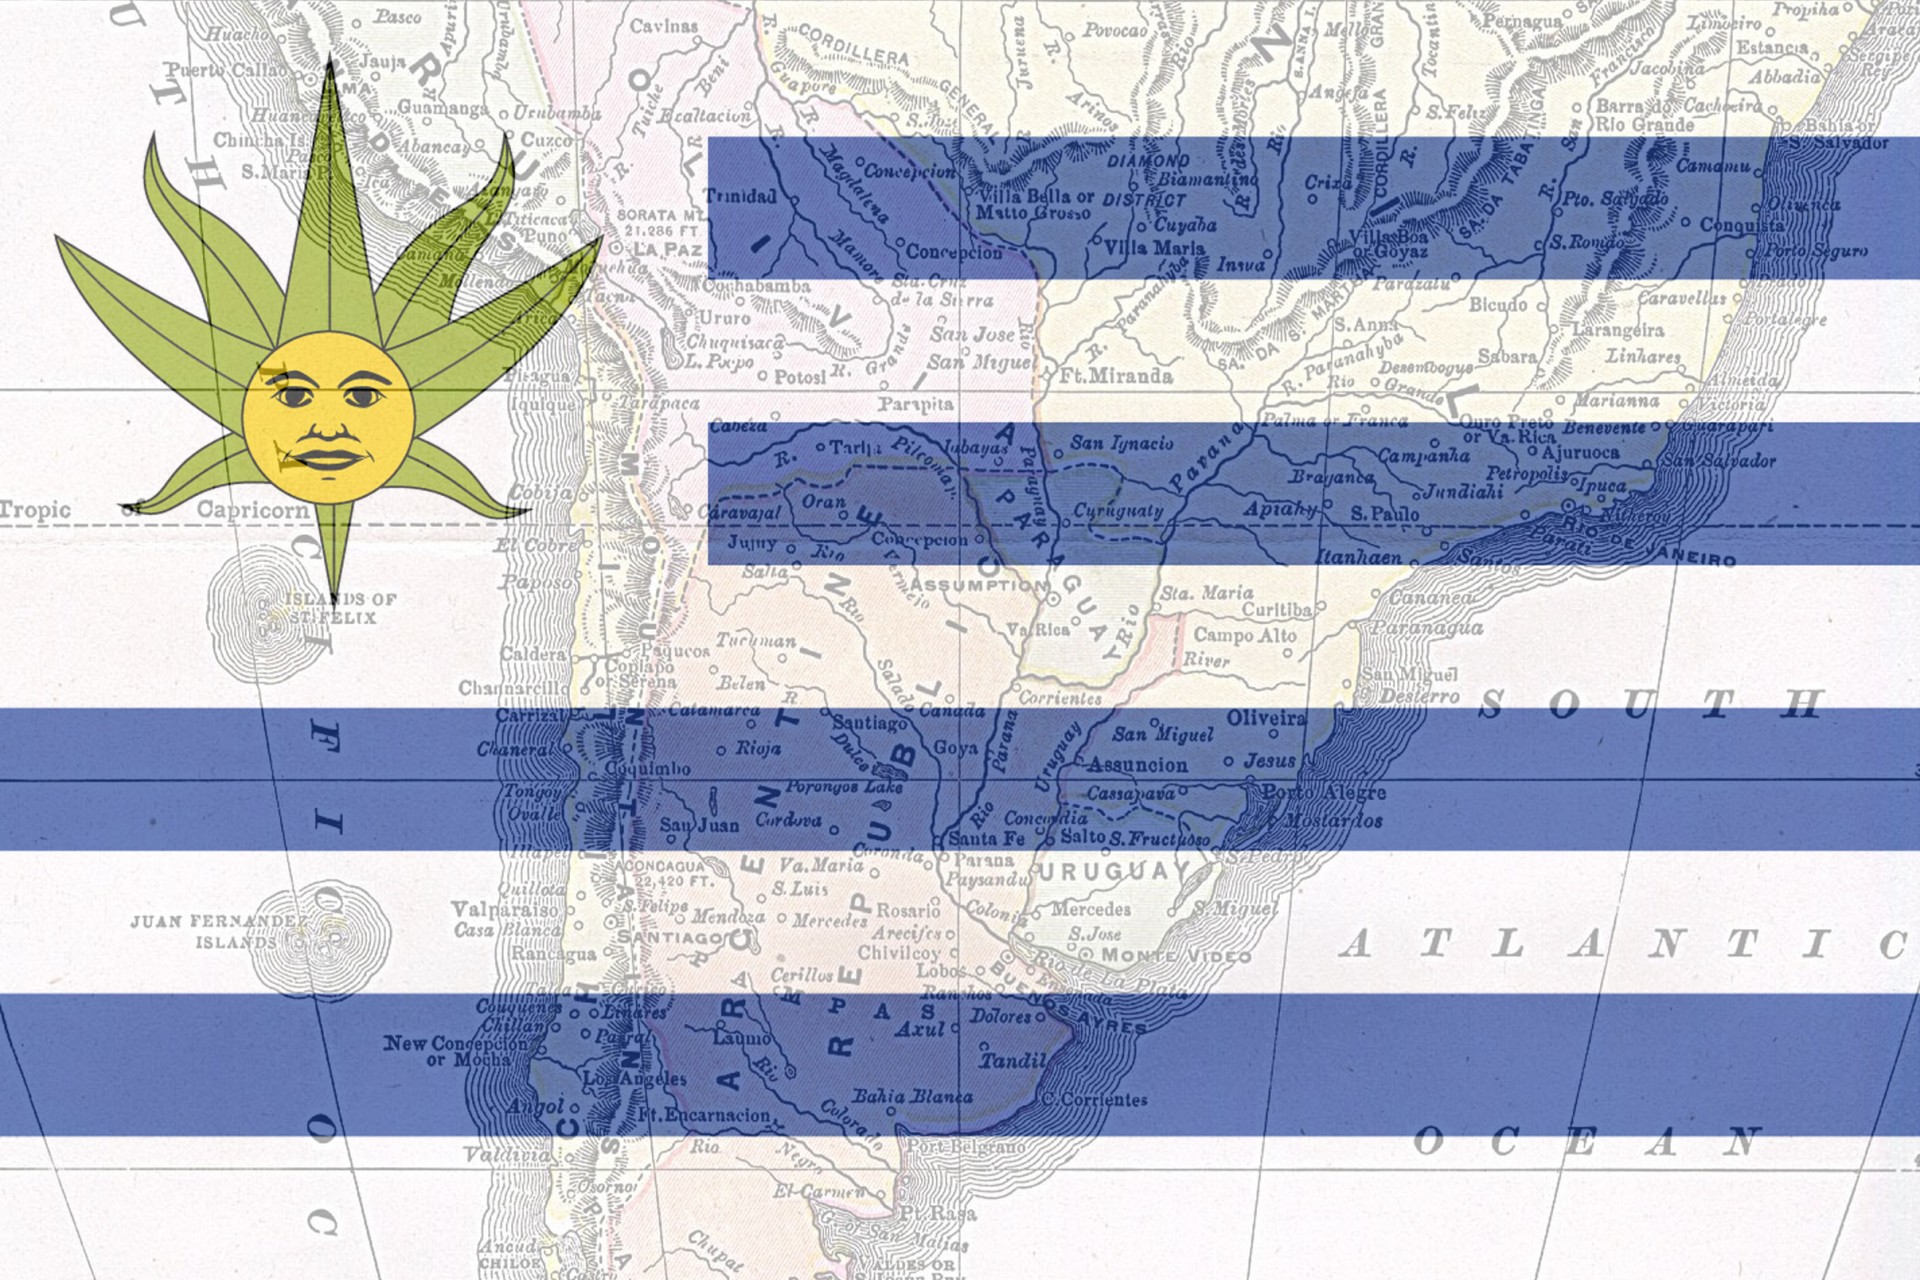 Uruguay-flag-marihuana-popaganda